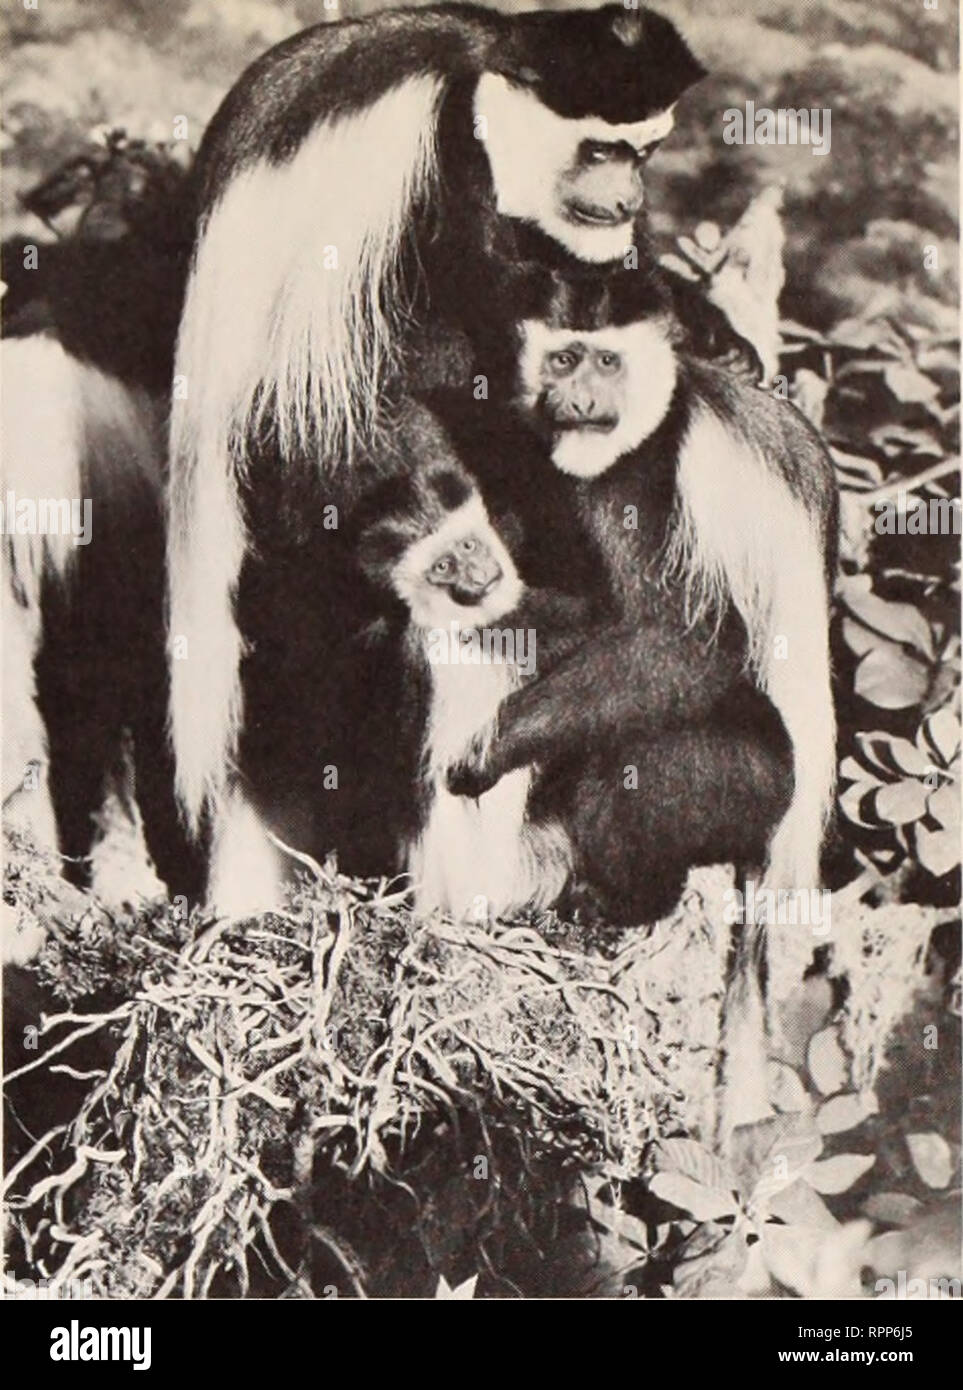 Colobus Monkey, Our Animals